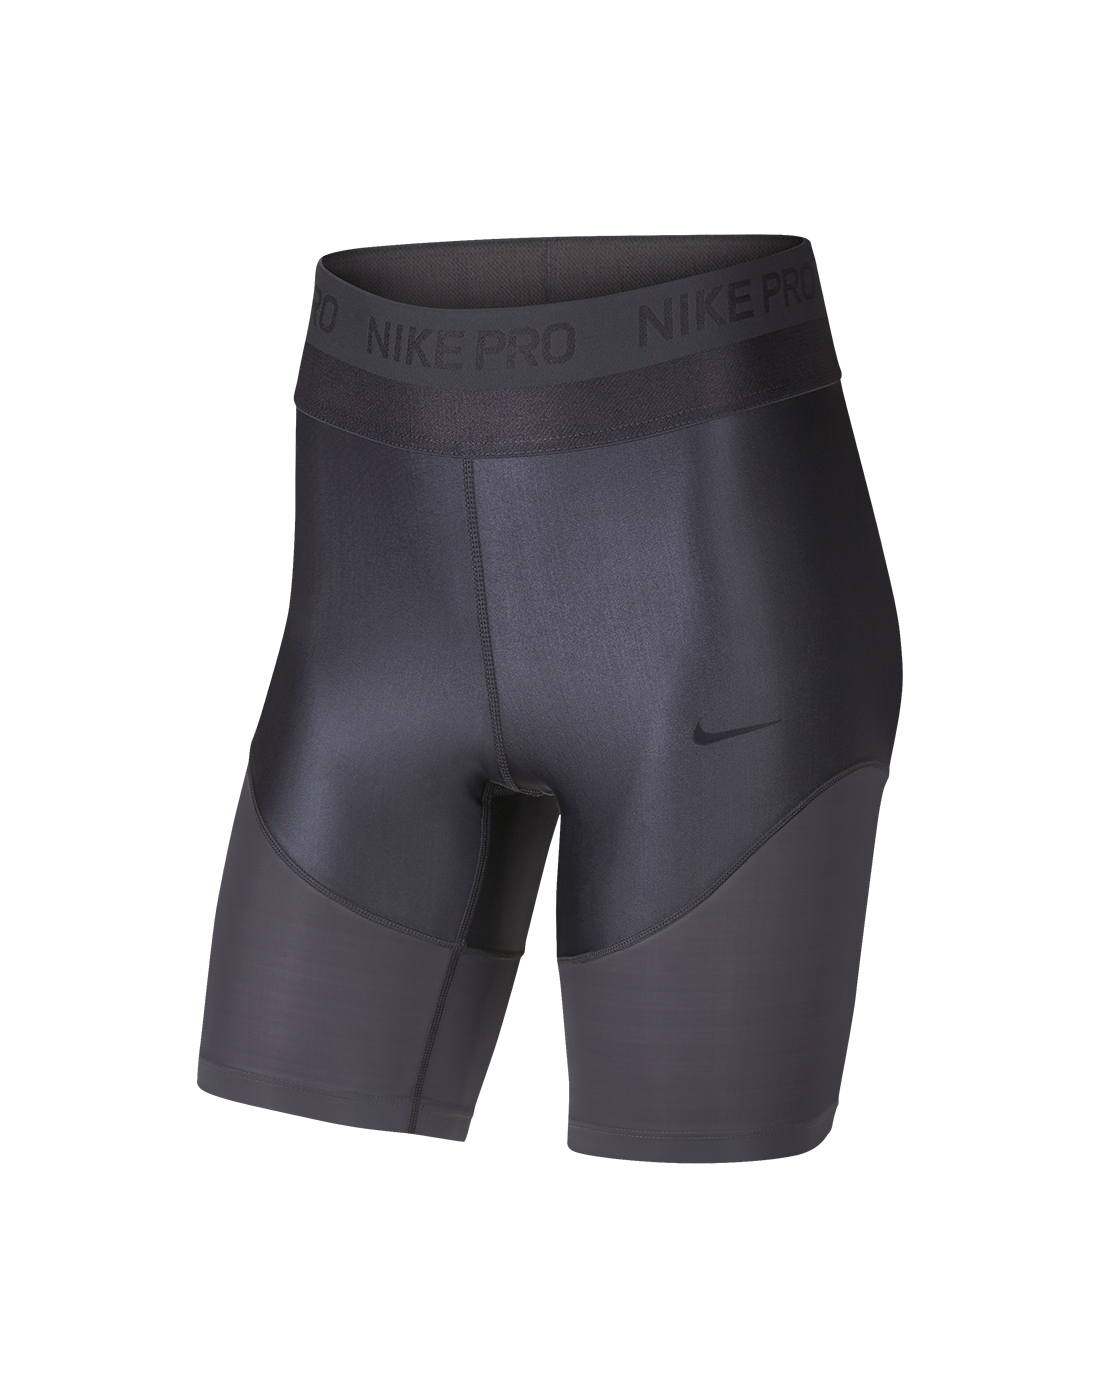 nike 8 inch shorts womens